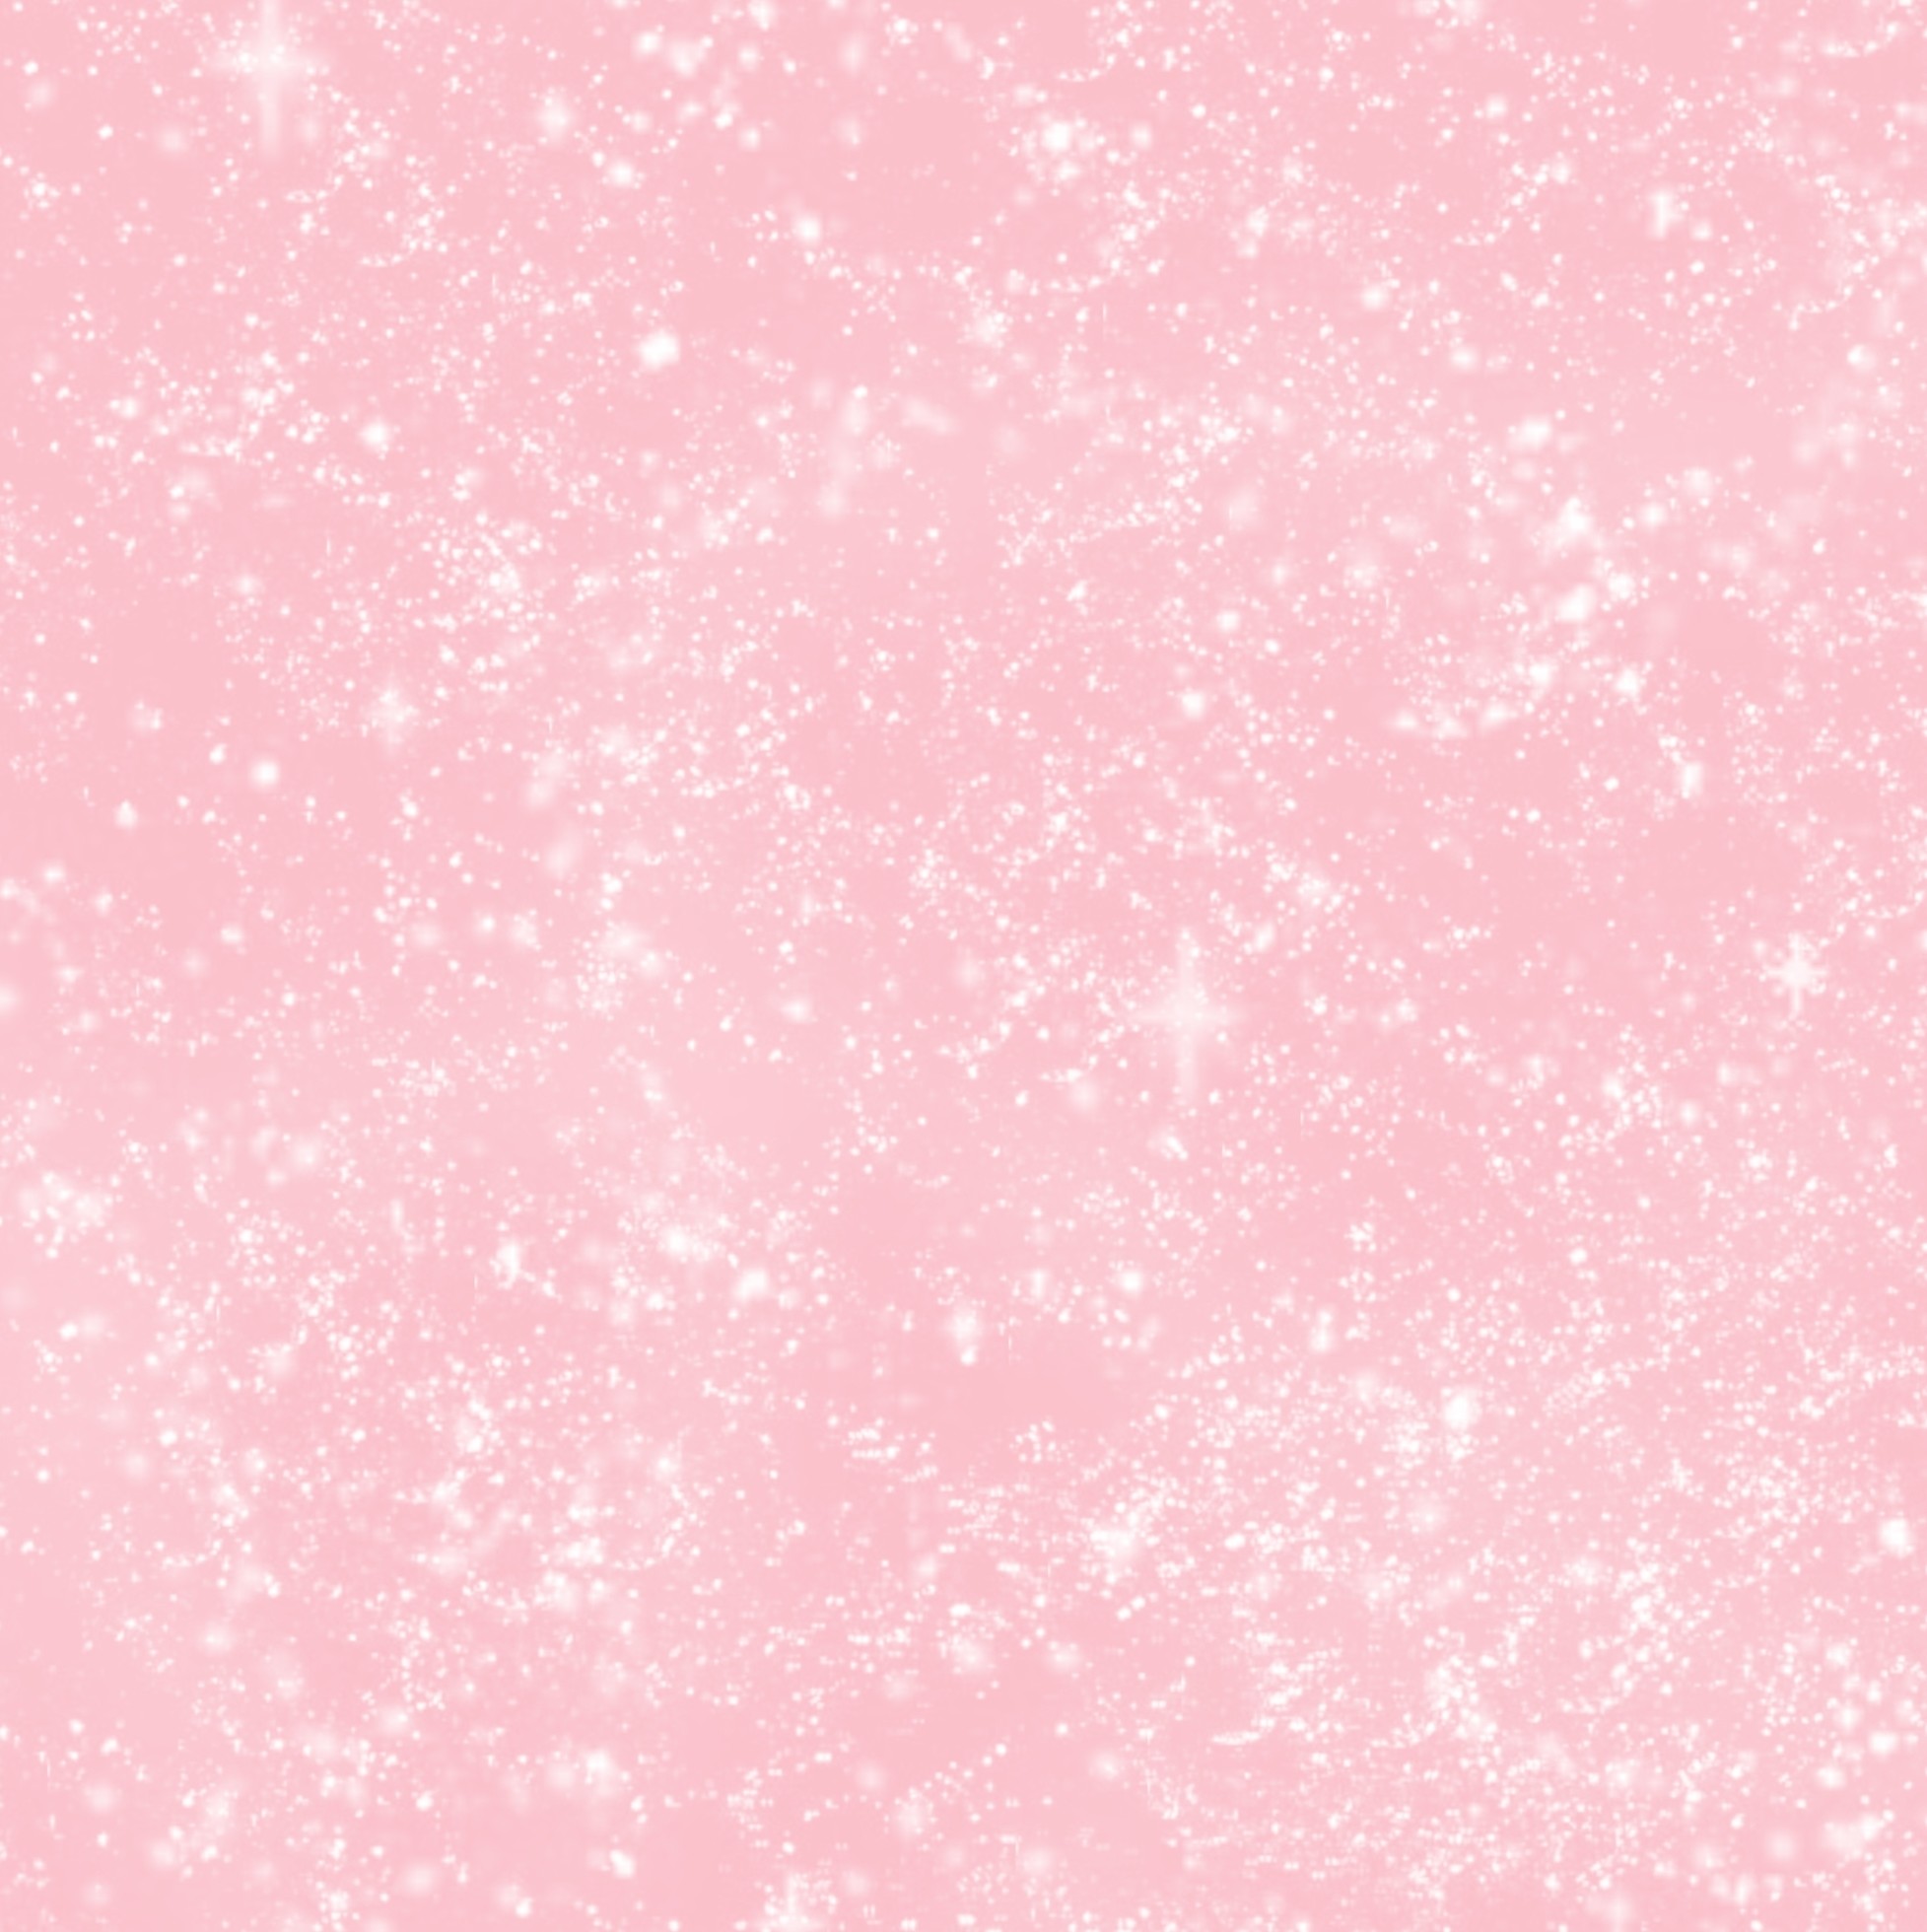 Cute Pink HD Desktop Wallpaper Download Free 4.